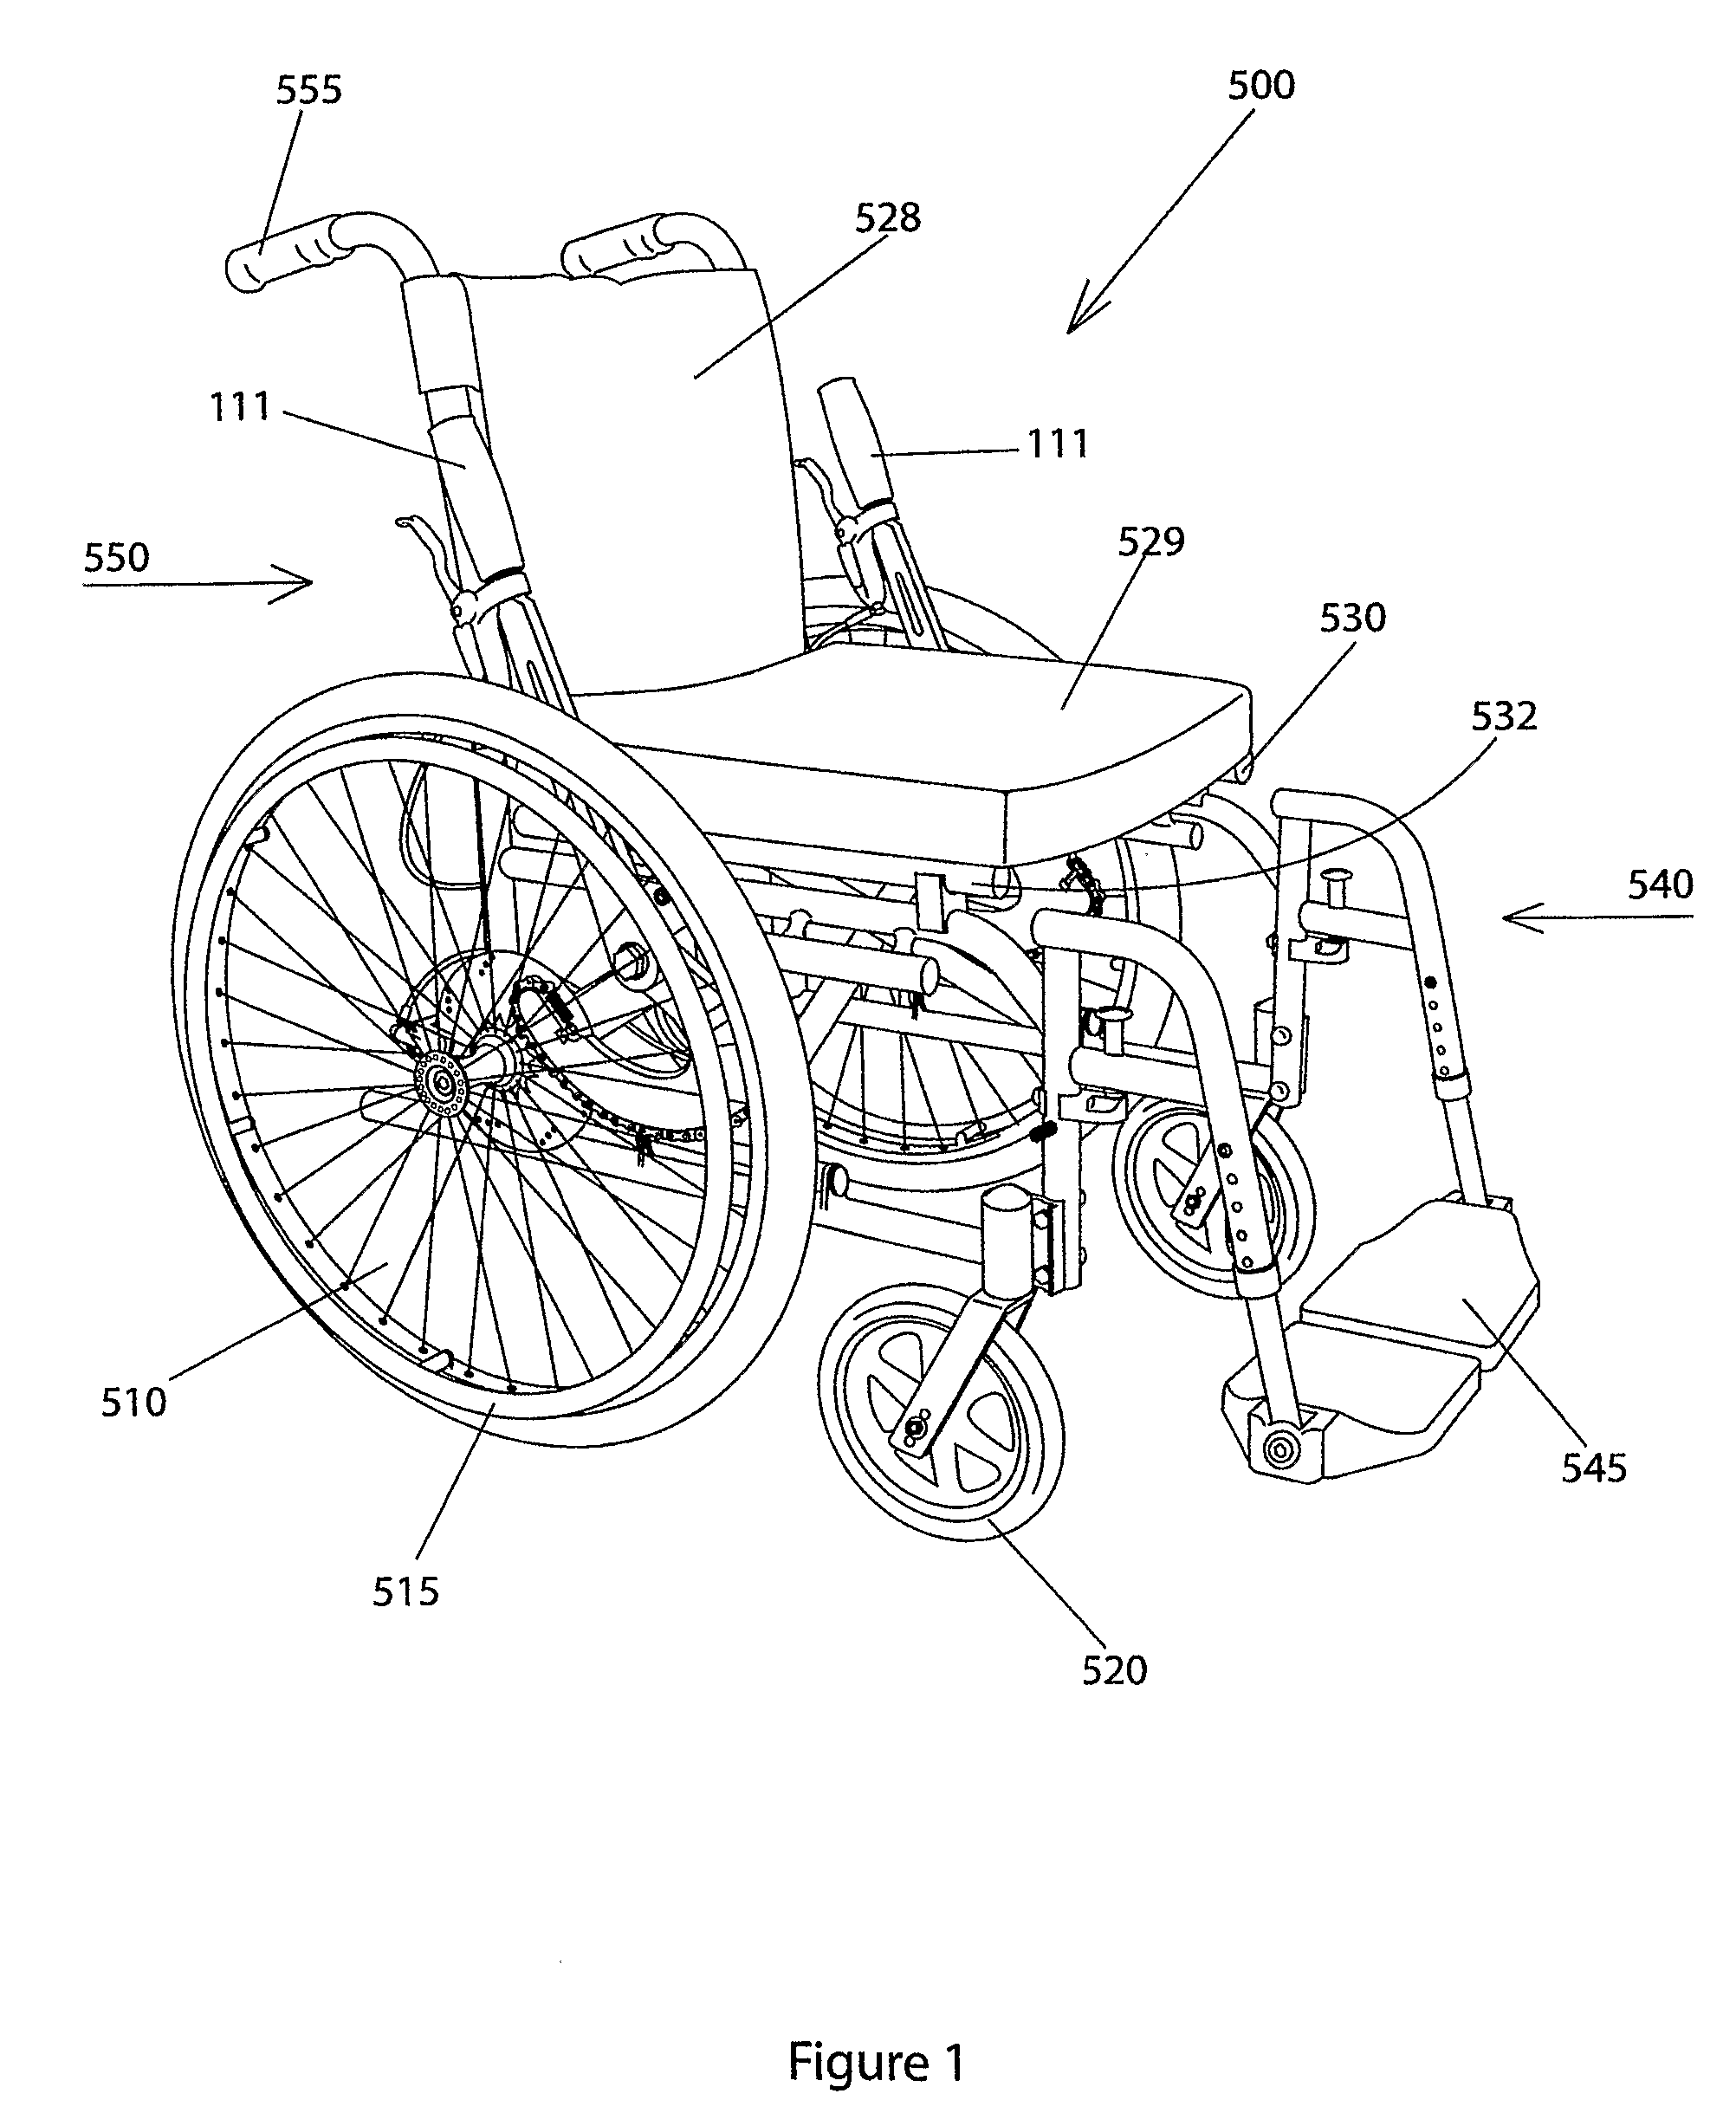 User-propelled wheeled vehicles